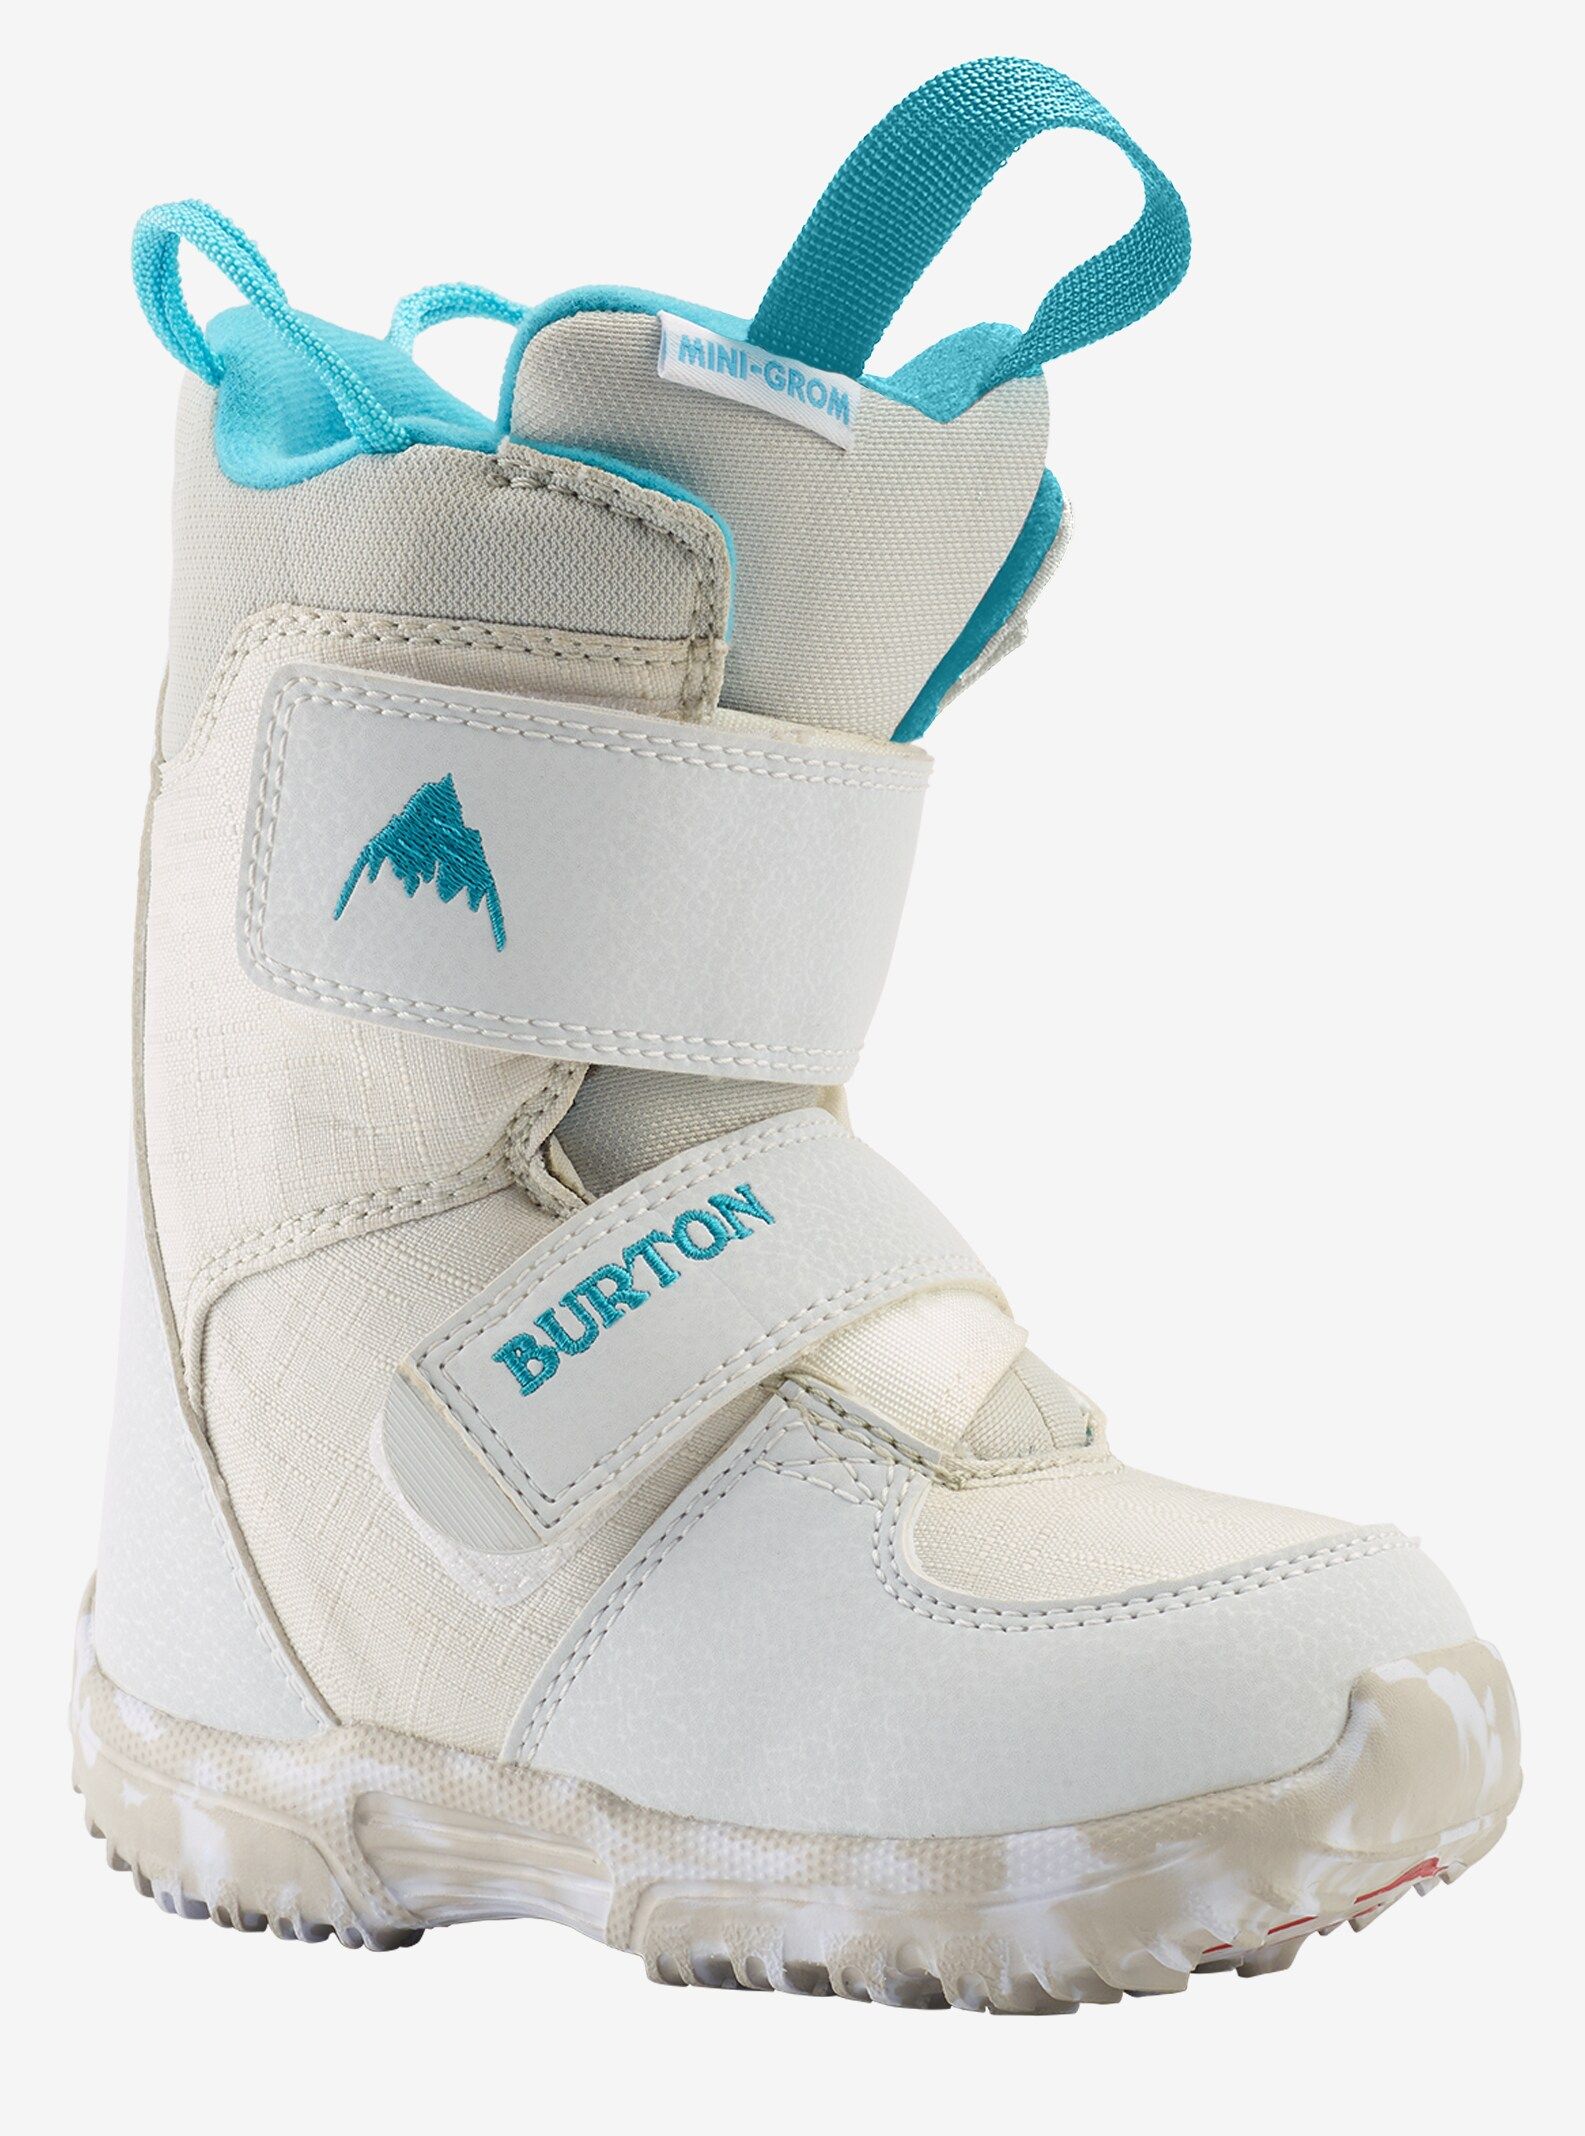 Toddlers' Burton Mini Grom Snowboard Boot | Burton.com Winter 2022 | Burton Snowboards US